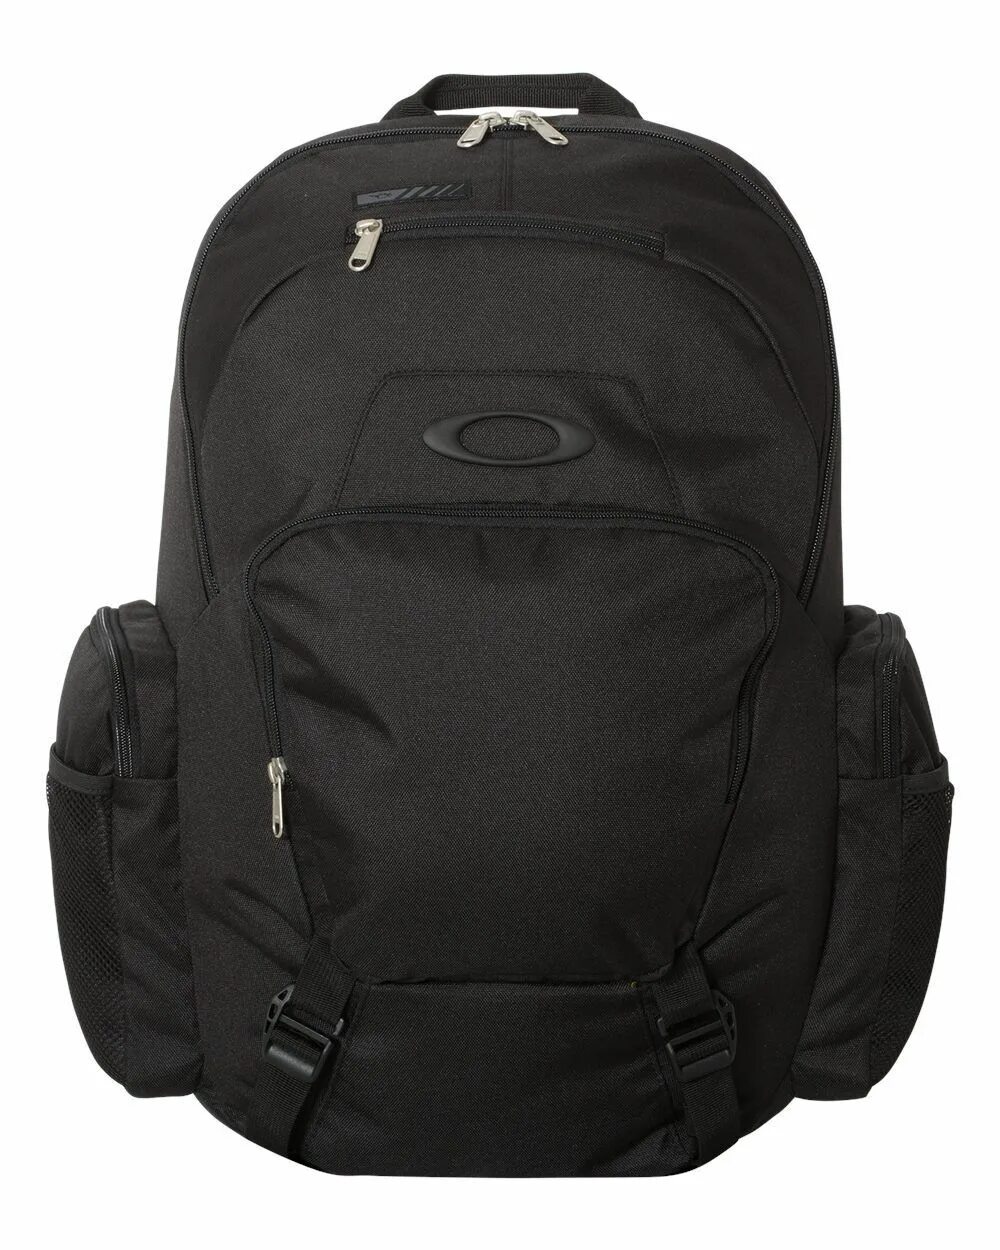 Рюкзак oakley. Рюкзак Окли. Рюкзак oakley "mechanism" (черный). Oakley Backpack. Oakley рюкзак школьный.